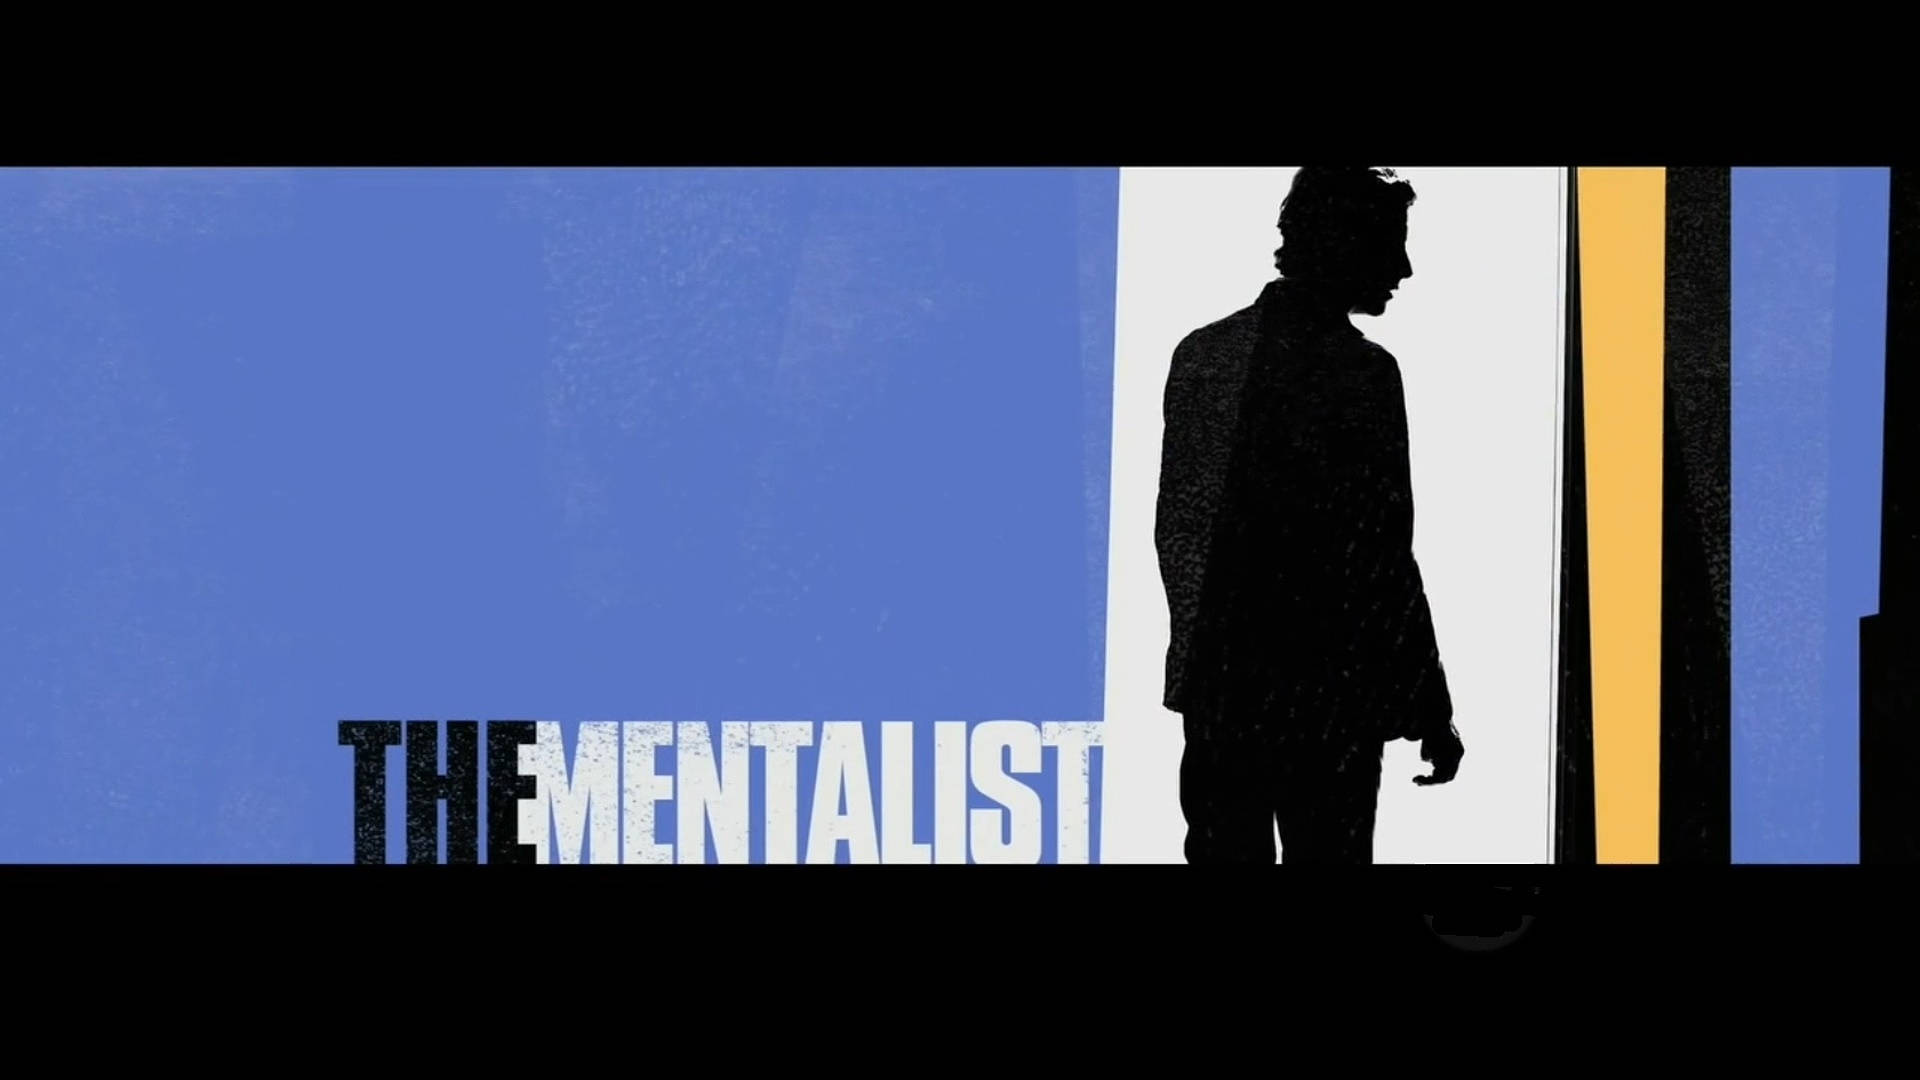 The Mentalist Tv Series Poster Wallpaper